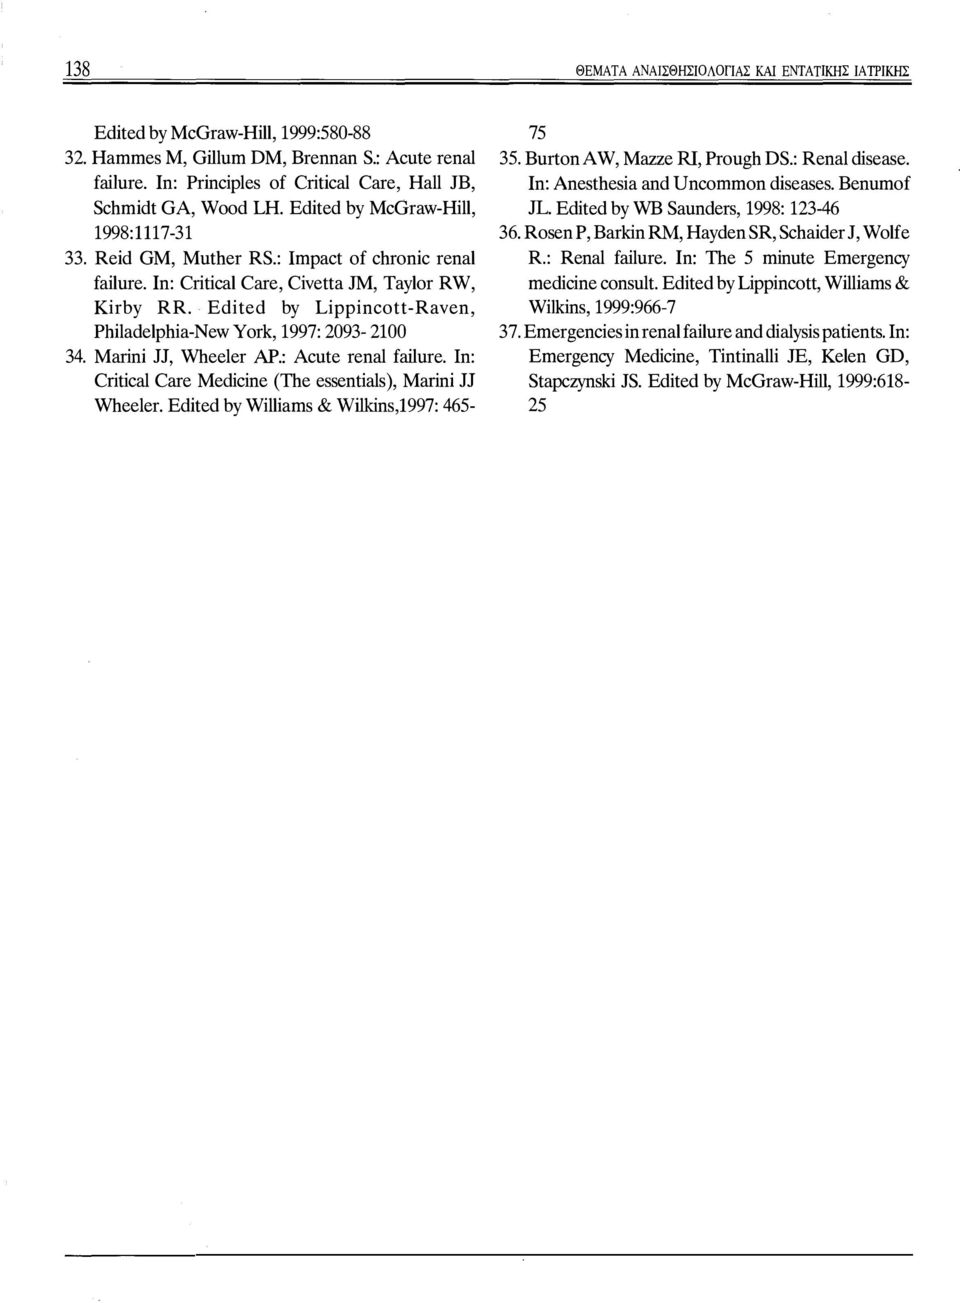 In: Critical Care, Civetta JM, Taylor RW, Kirby RR. Edited by Lippincott-Raven, Philadelphia-New York, 1997: 2093-2100 34. Marini JJ, Wheeler ΑΡ.: Acute renal failure.